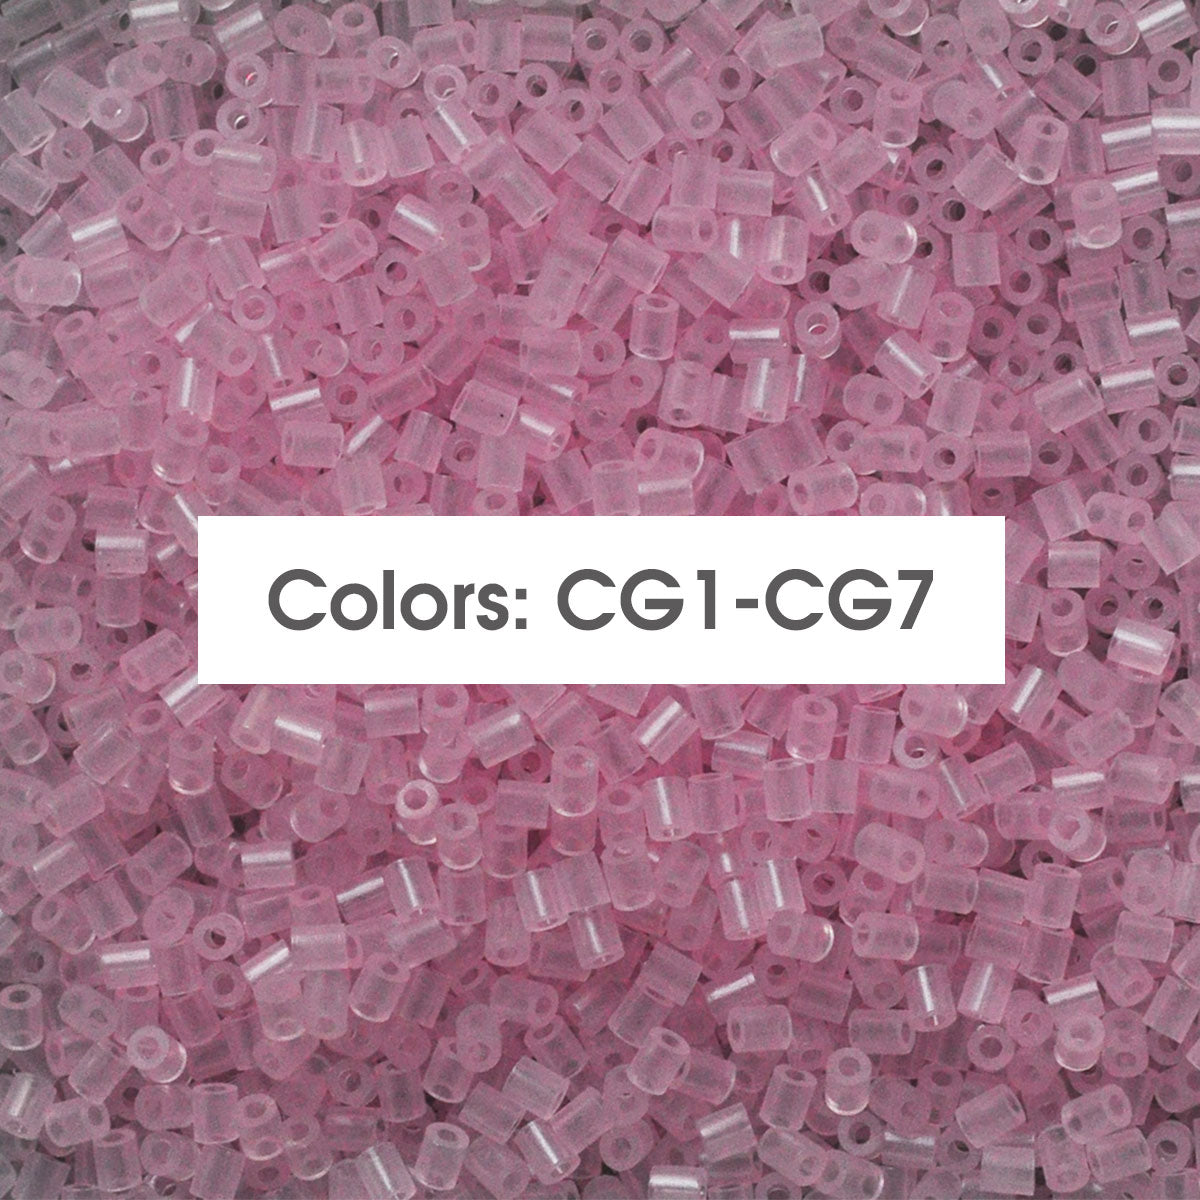 (CG1-CG7 Resplandor en colores oscuros) C-500G a granel